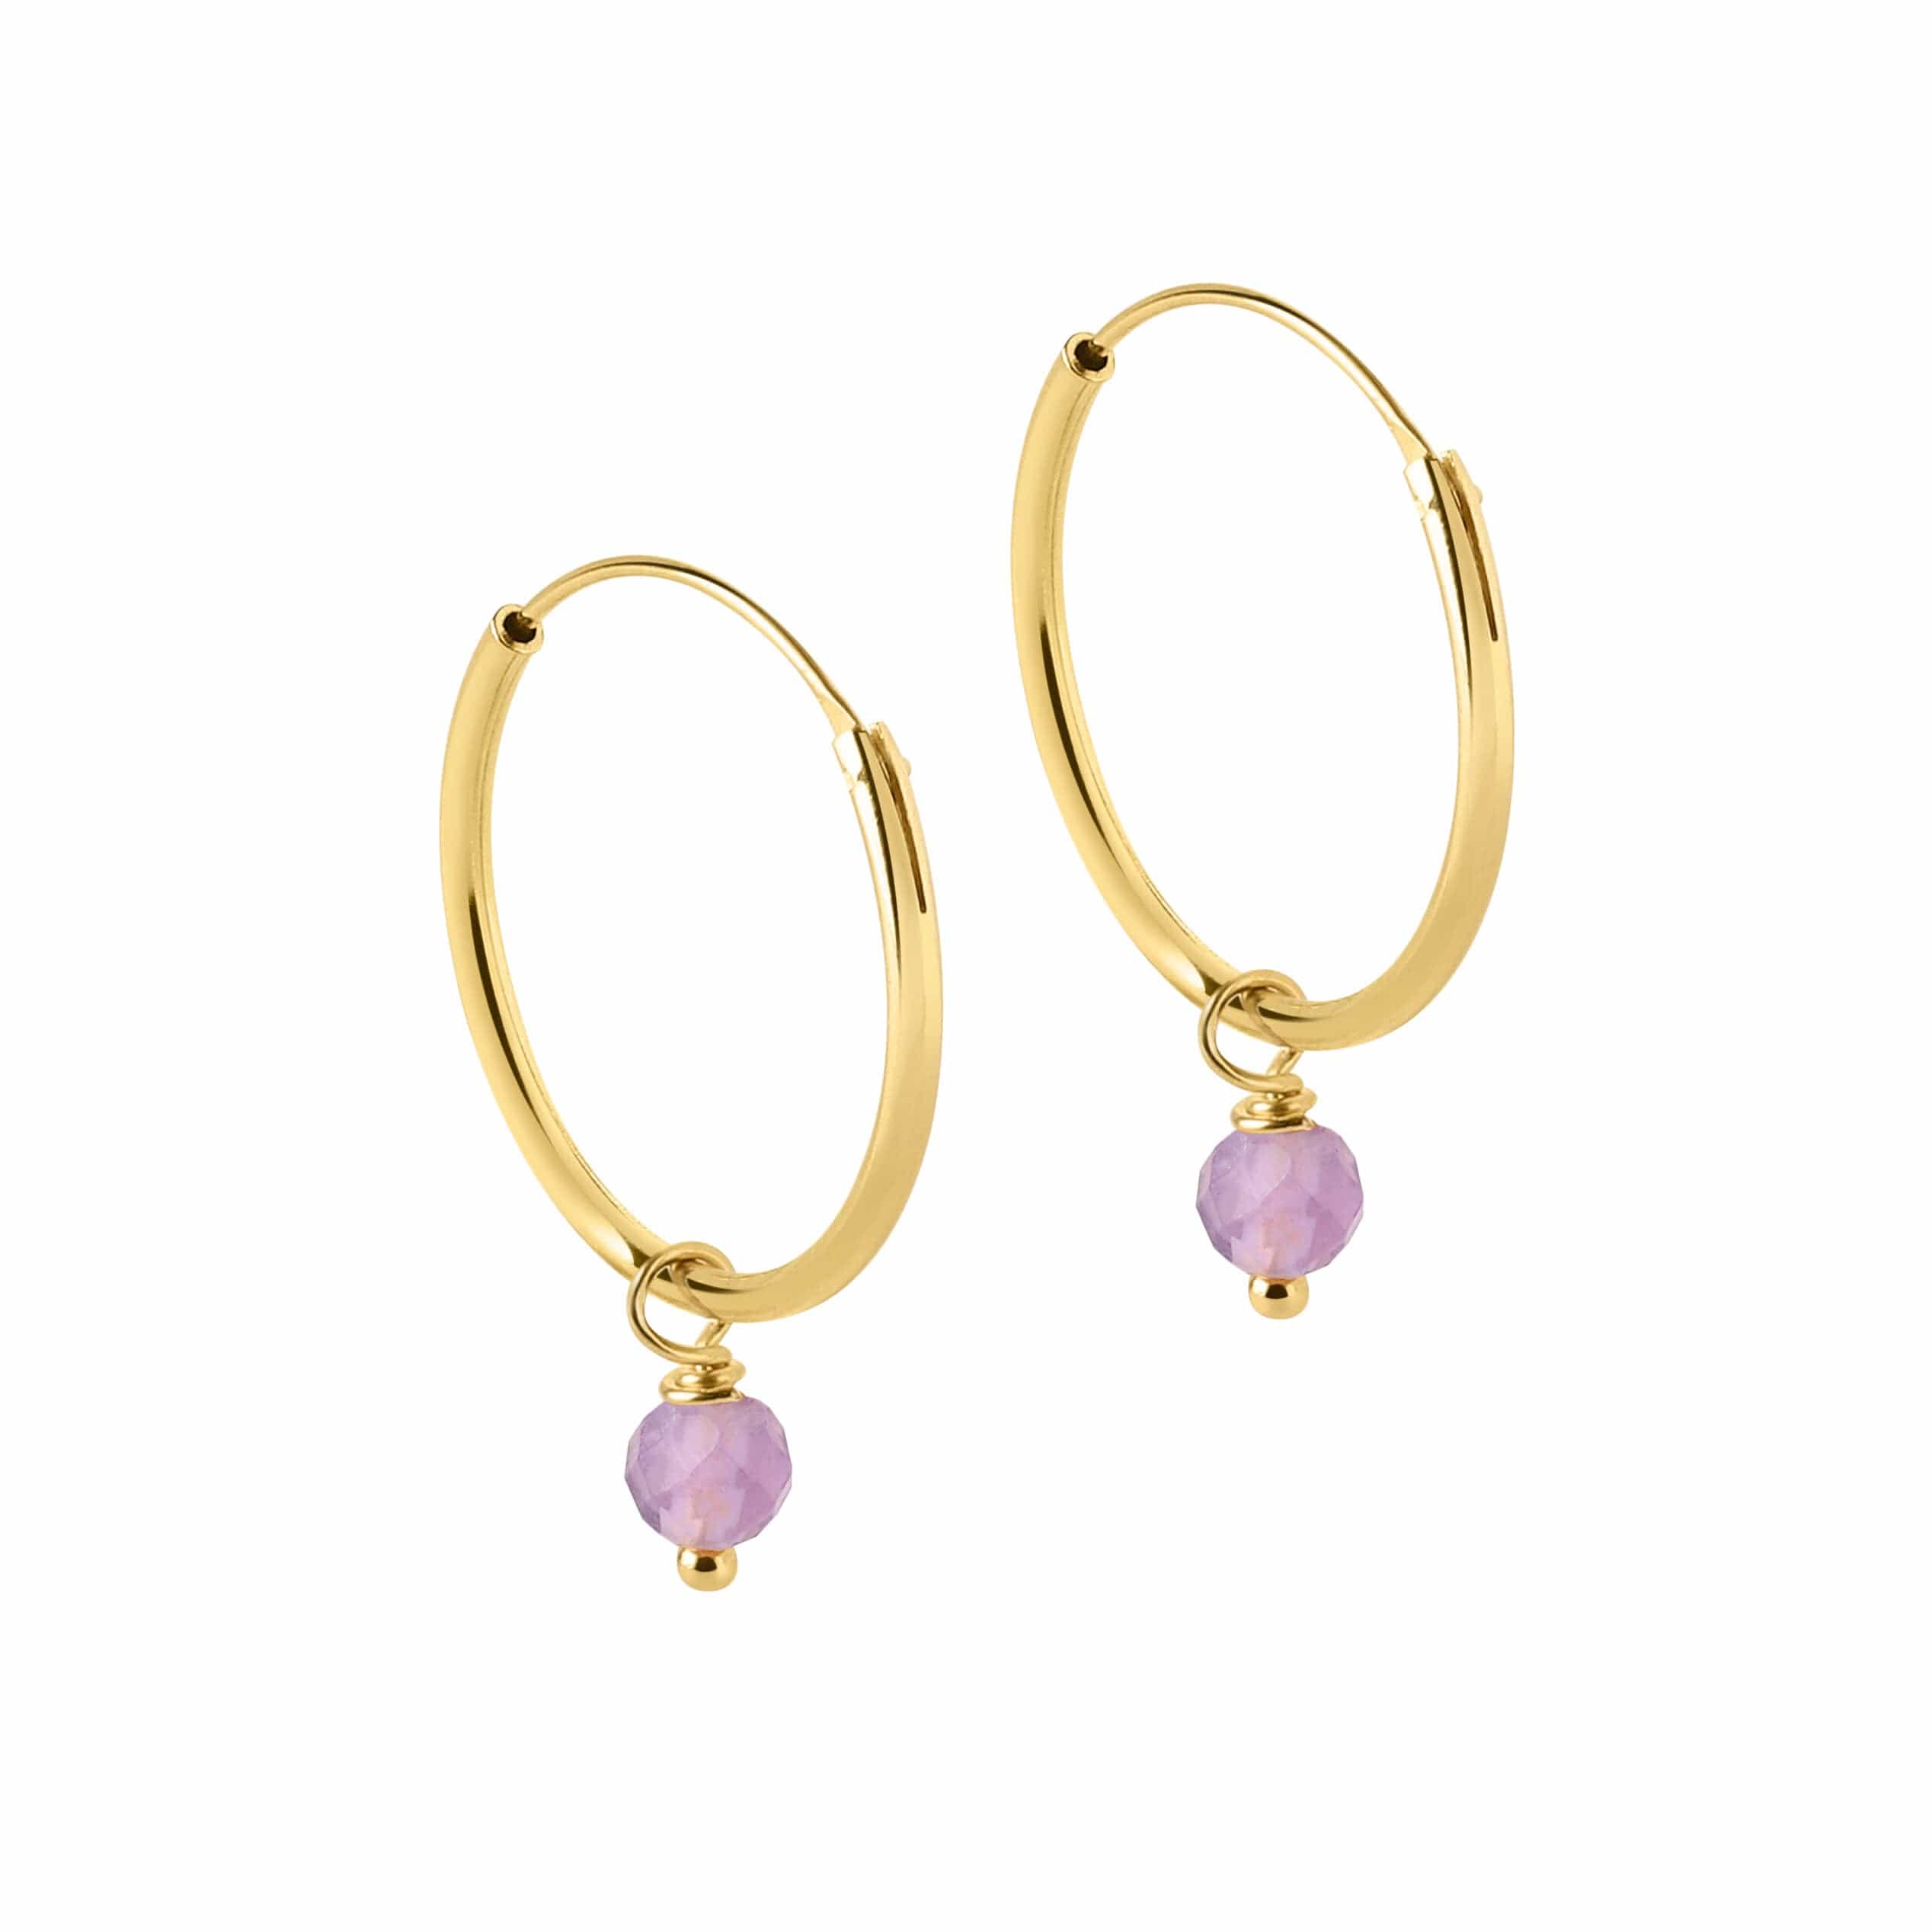 Medium Gold Plated Hoop Earrings with Purple Stone